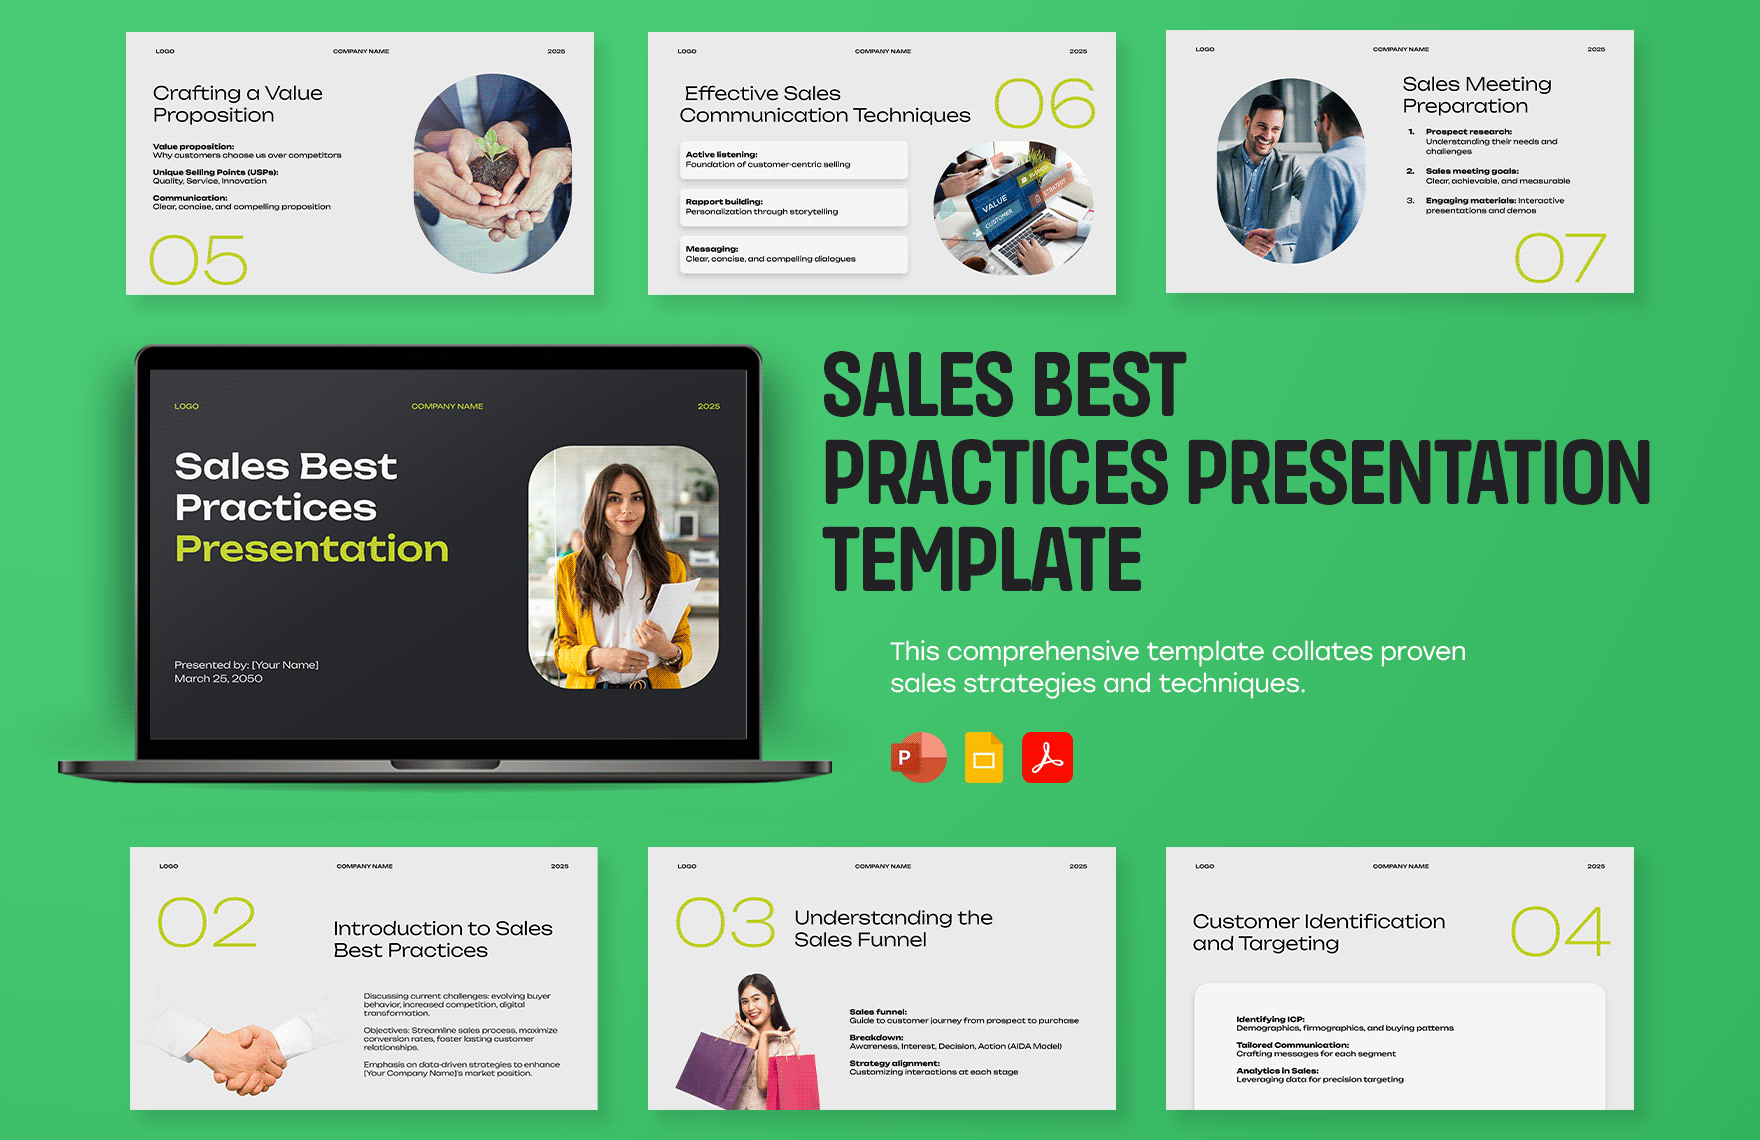 Sales Best Practices Presentation Template